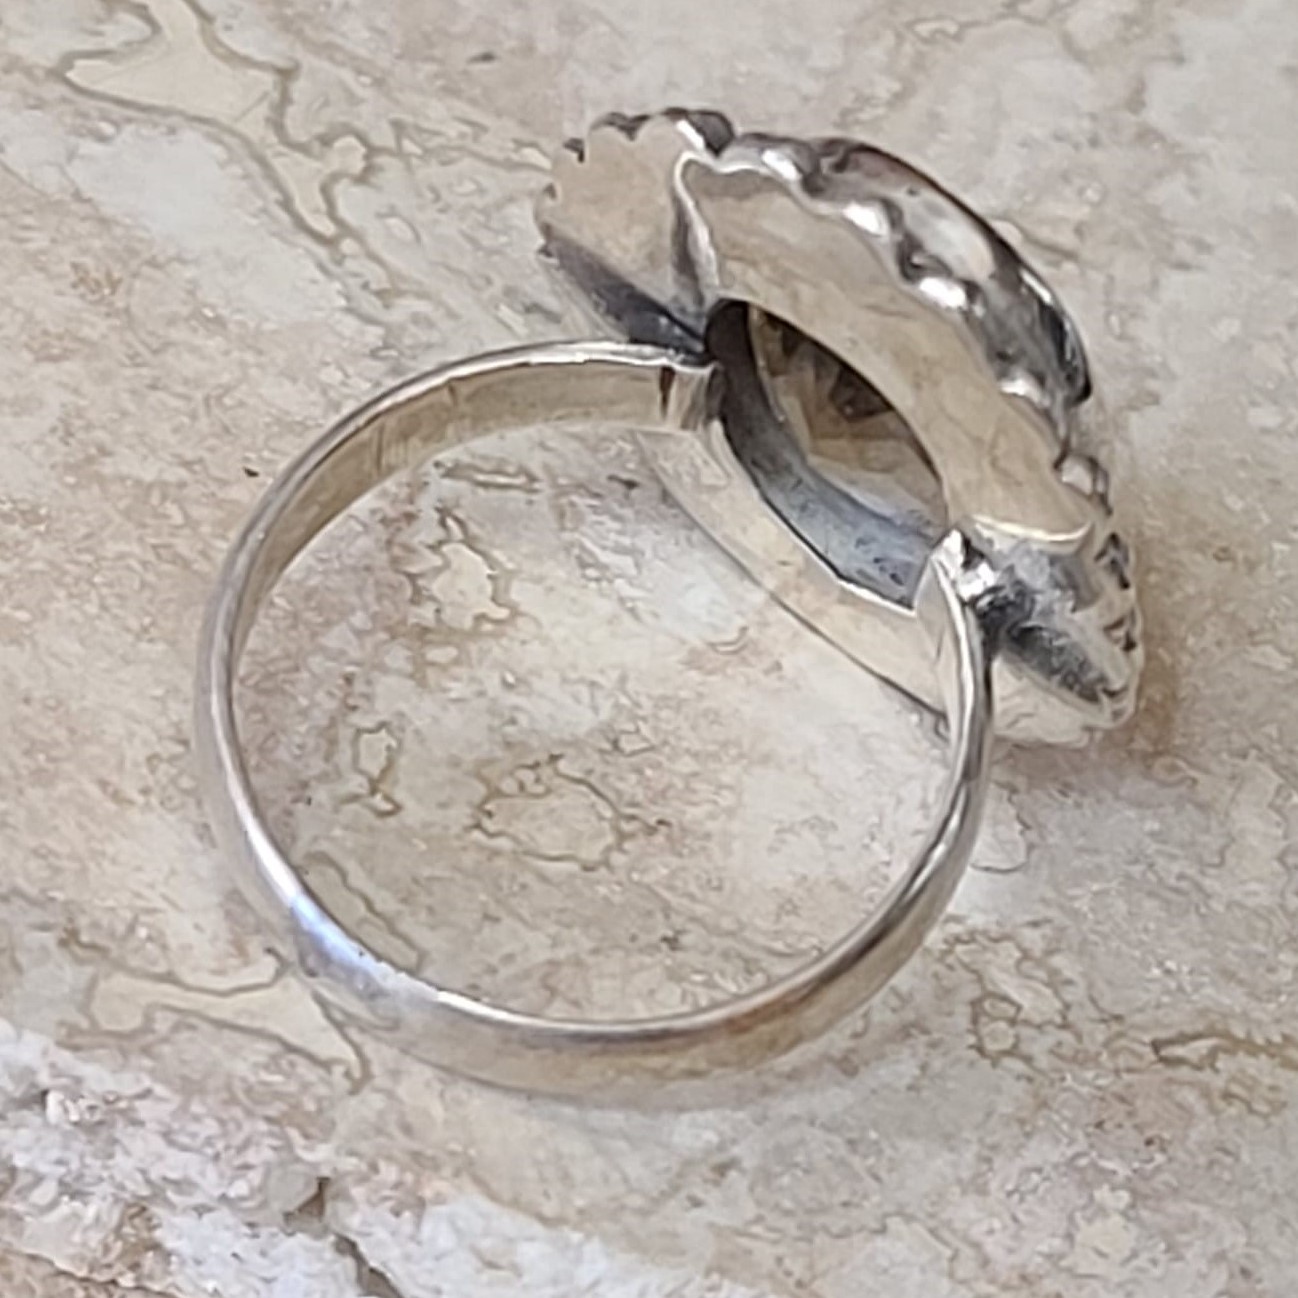 Smokey Topaz 925 Sterling Silver Ring Size 8 1/2